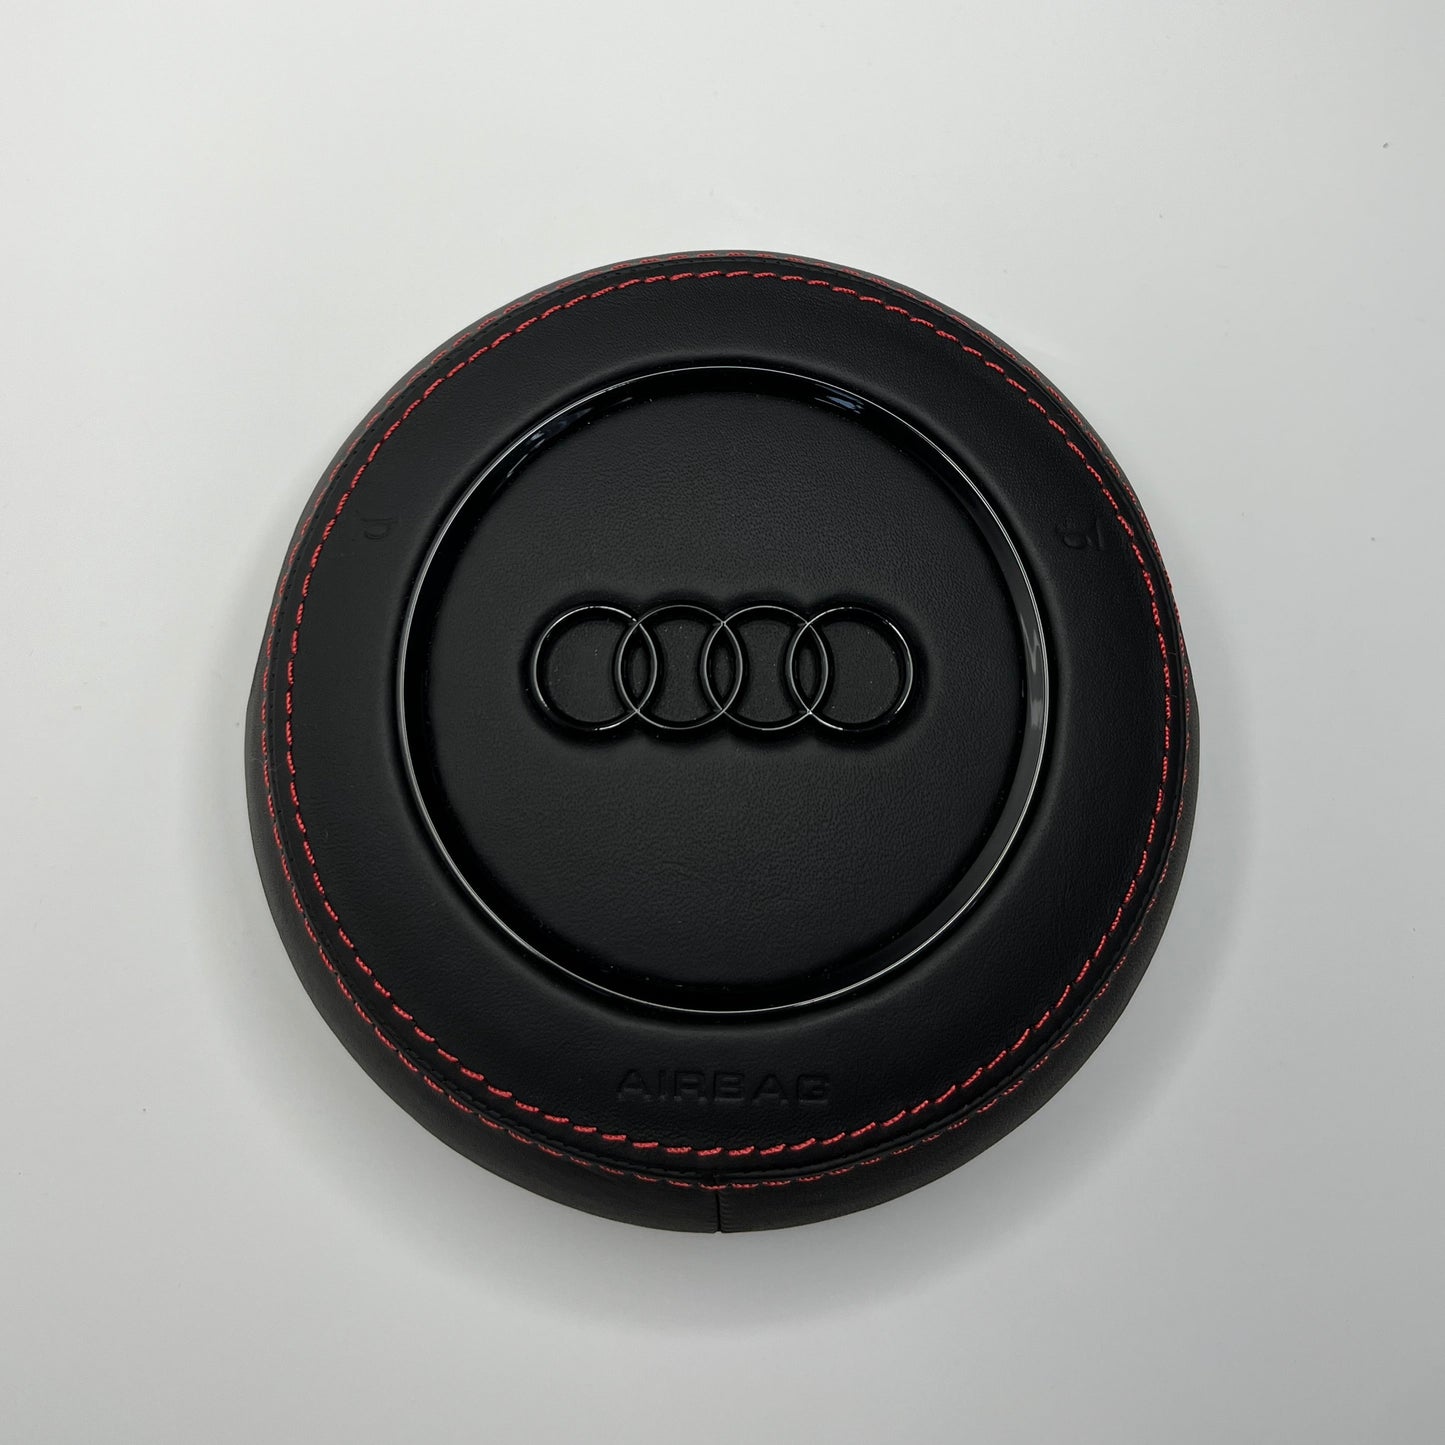 Audi A3 8V A4 B8.5 A6 C7 Airbag Cover